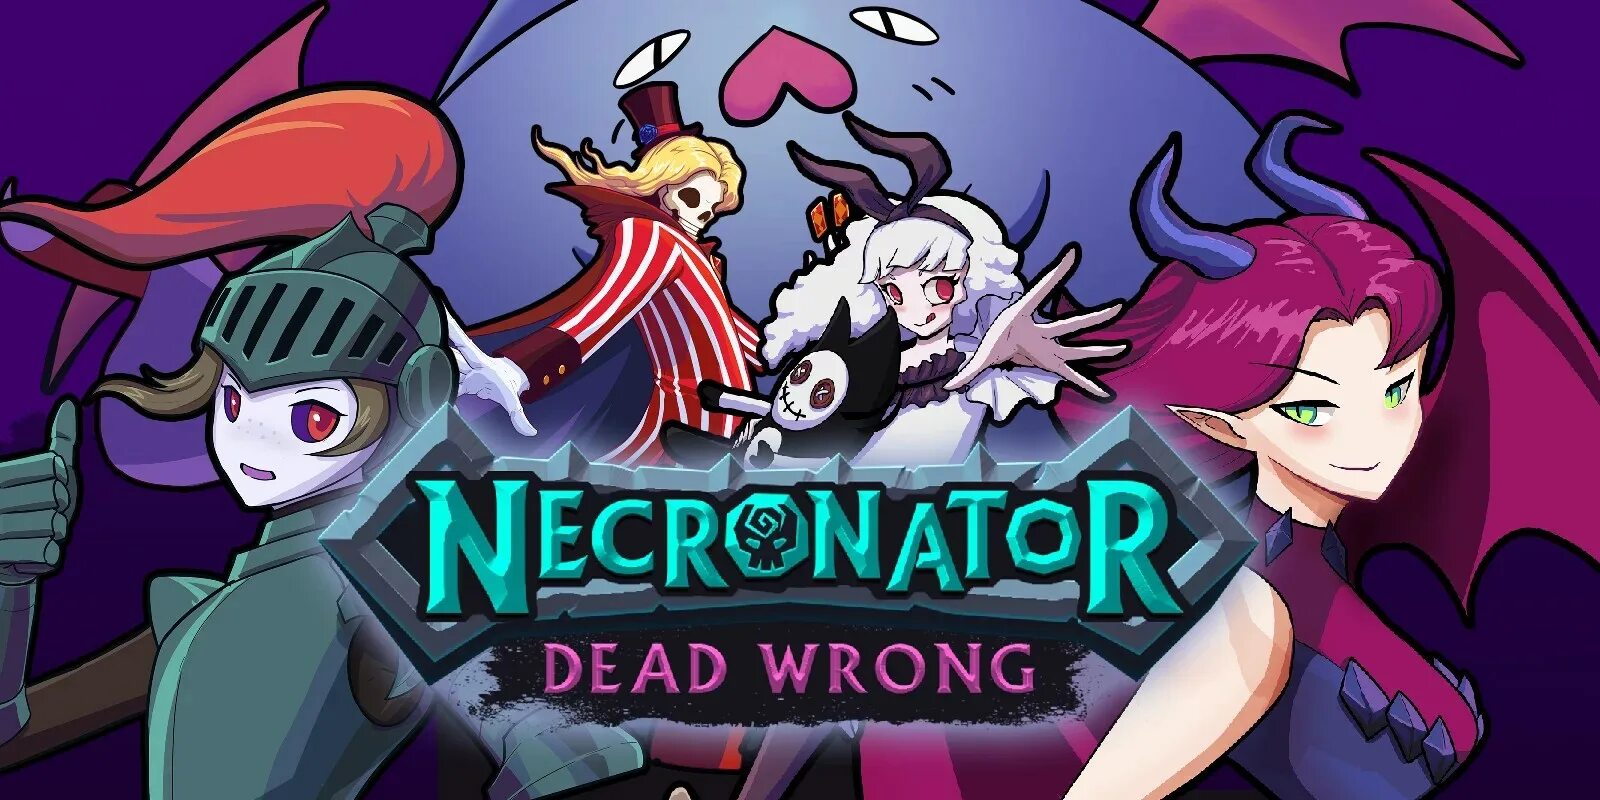 Necronator: Dead wrong. Necronator Dead wrong v1.4.0. Дед Вронг. Некронатор игра флеш. Dead wrong